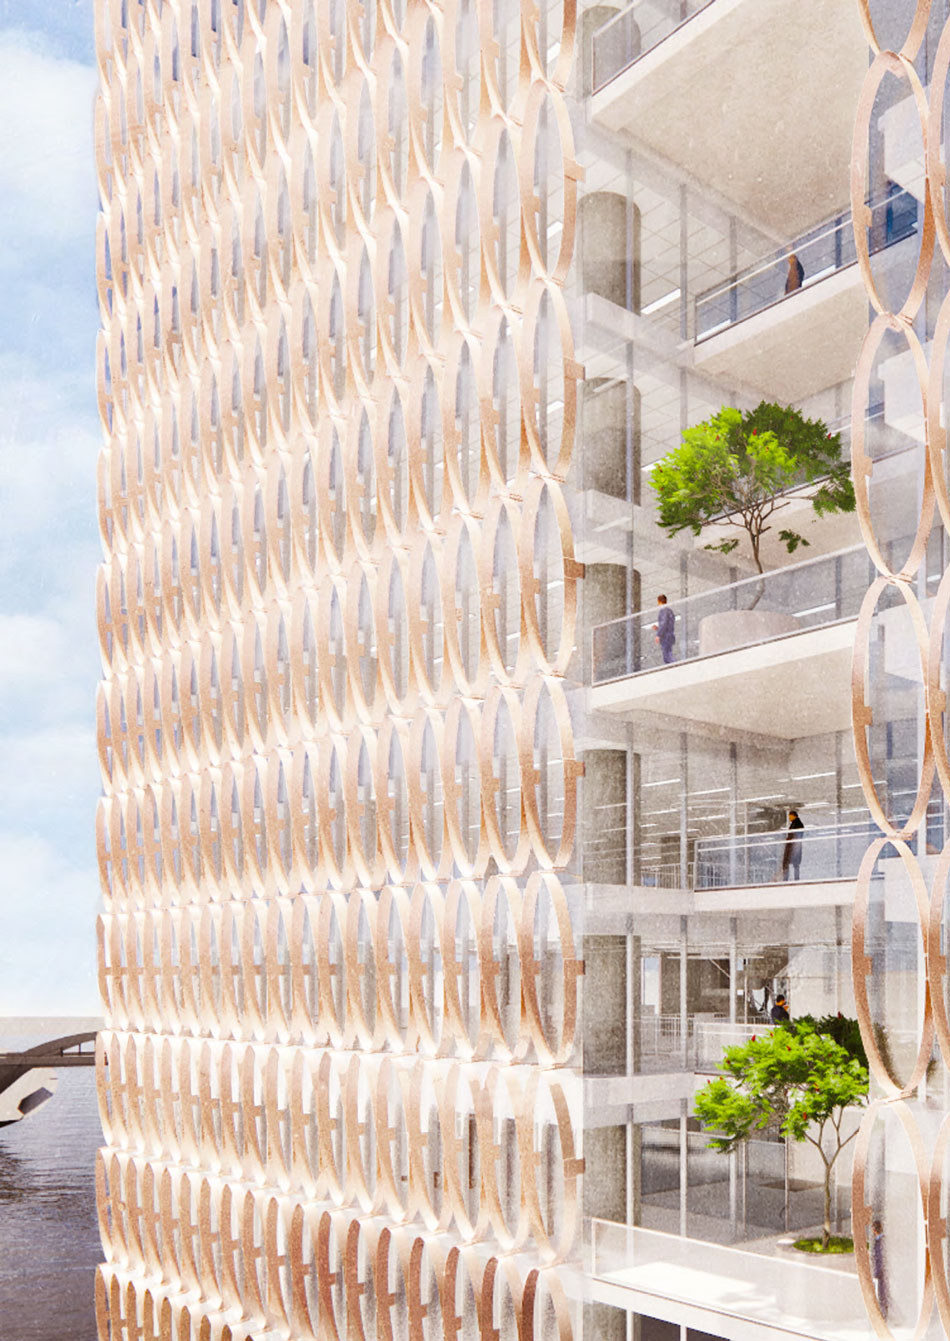 Architectural rendering of the facade design of 205 North Quay, Brisbane CBD